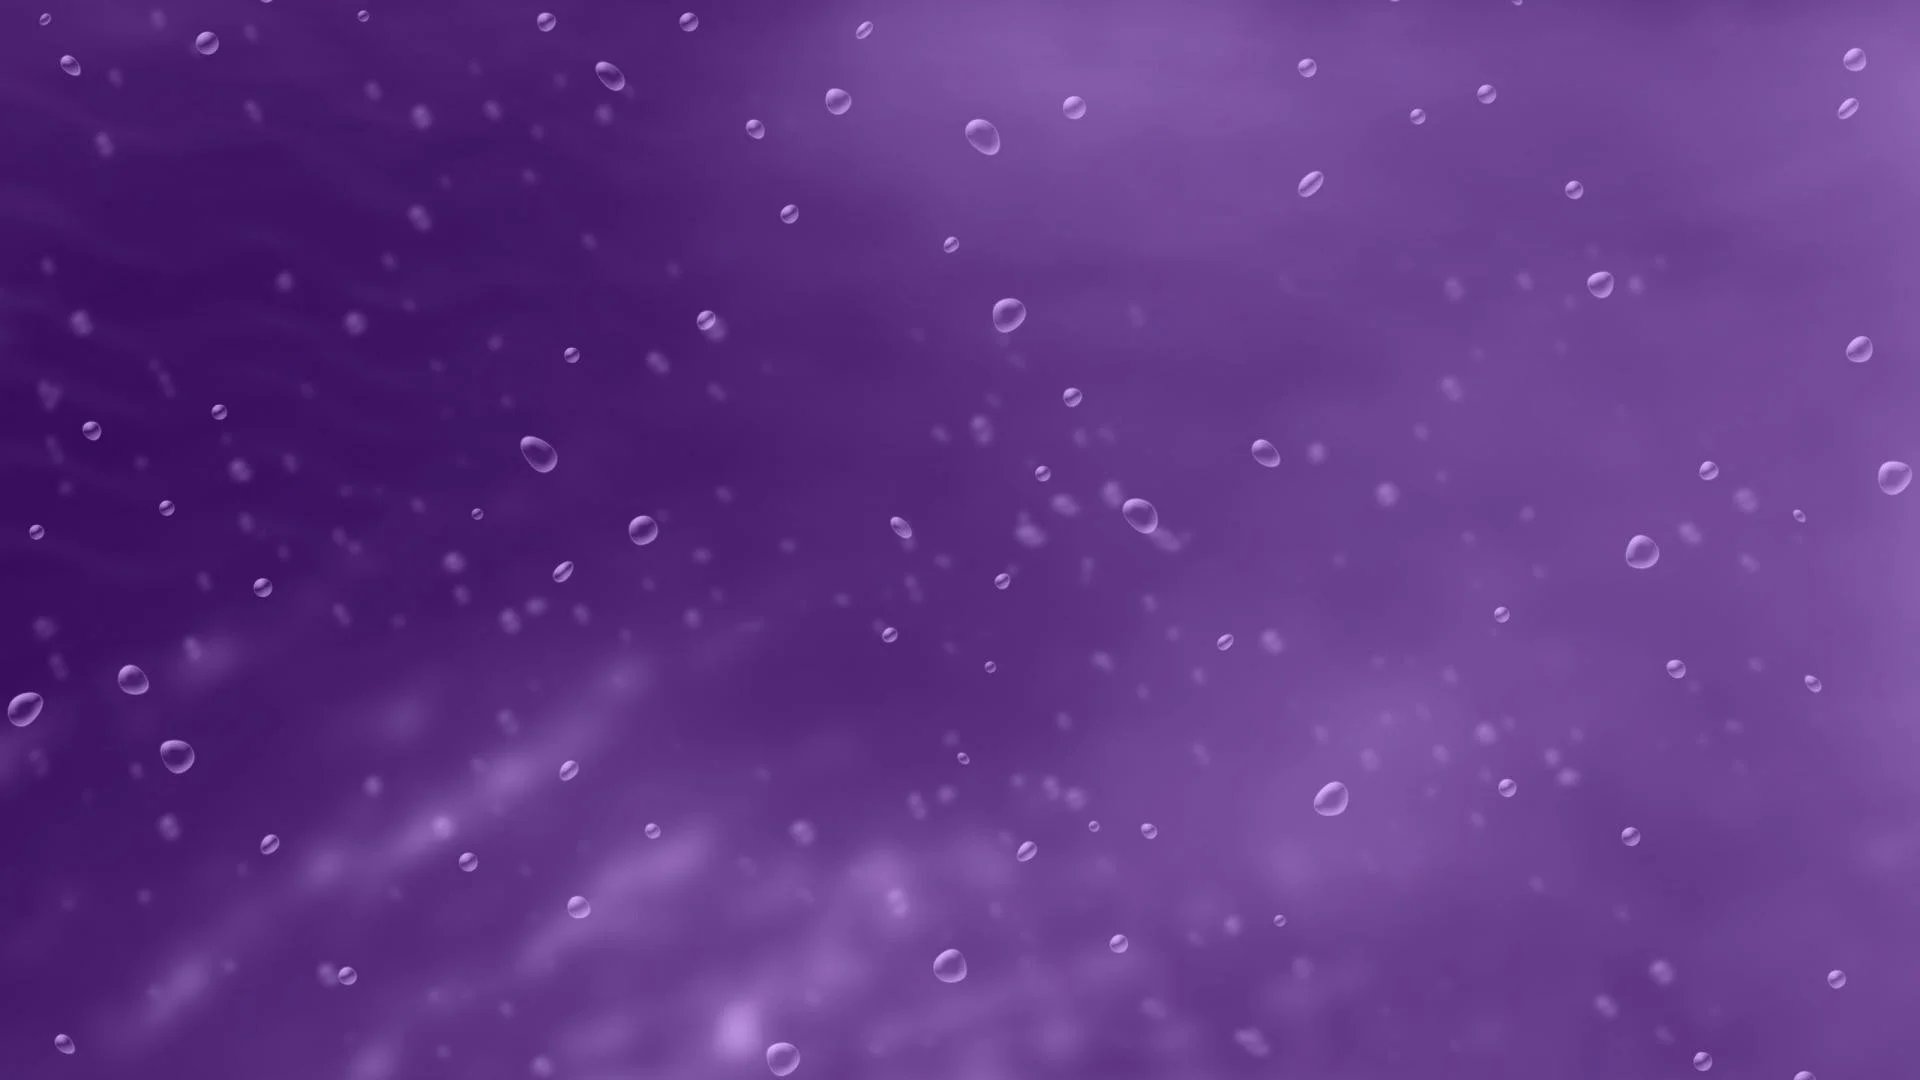 Dark Purple Bubble For Desktop Widescreen and HD background Wallpaper